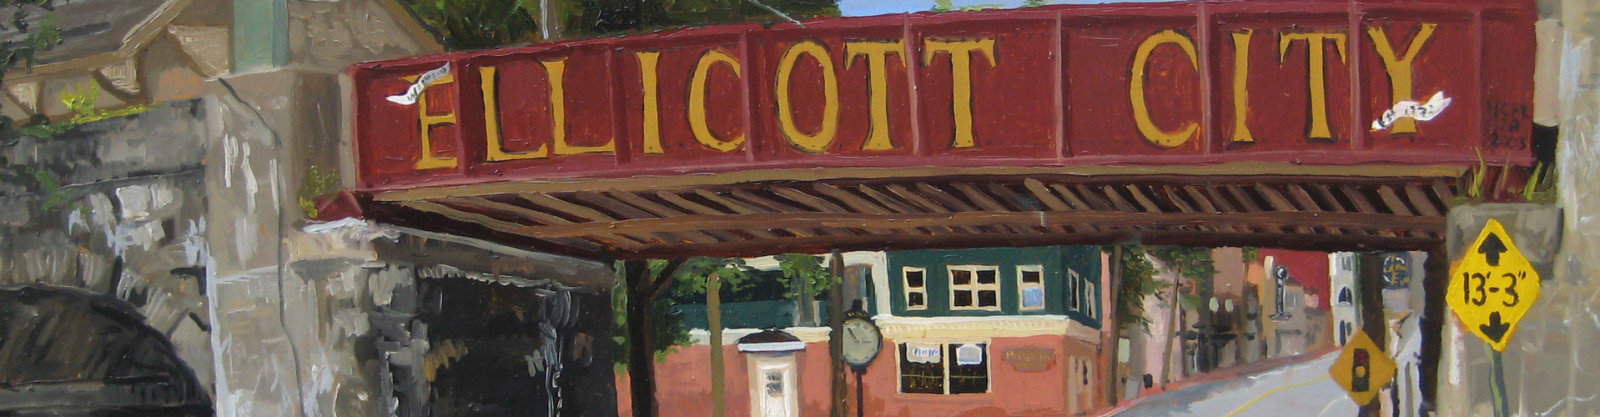 Old Ellicott City